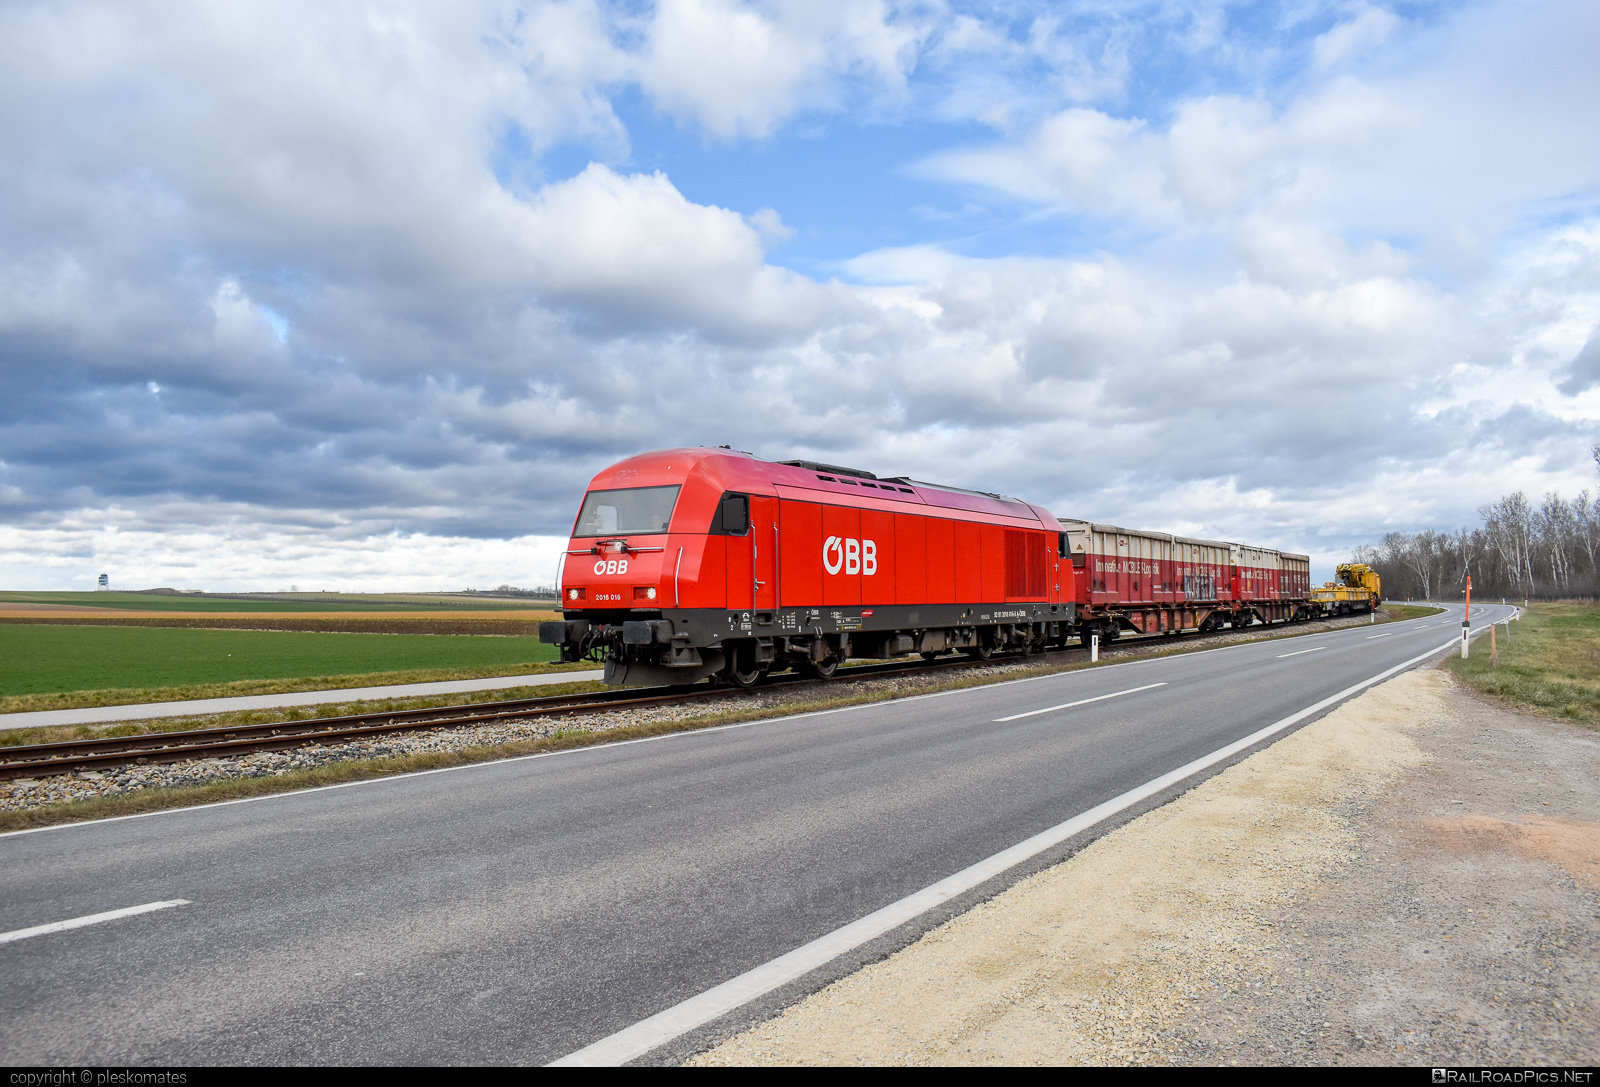 Siemens ER20 - 2016 016 operated by Rail Cargo Austria AG #er20 #er20hercules #eurorunner #hercules #mixofcargo #rcw #siemens #siemenser20 #siemenser20hercules #siemenseurorunner #siemenshercules